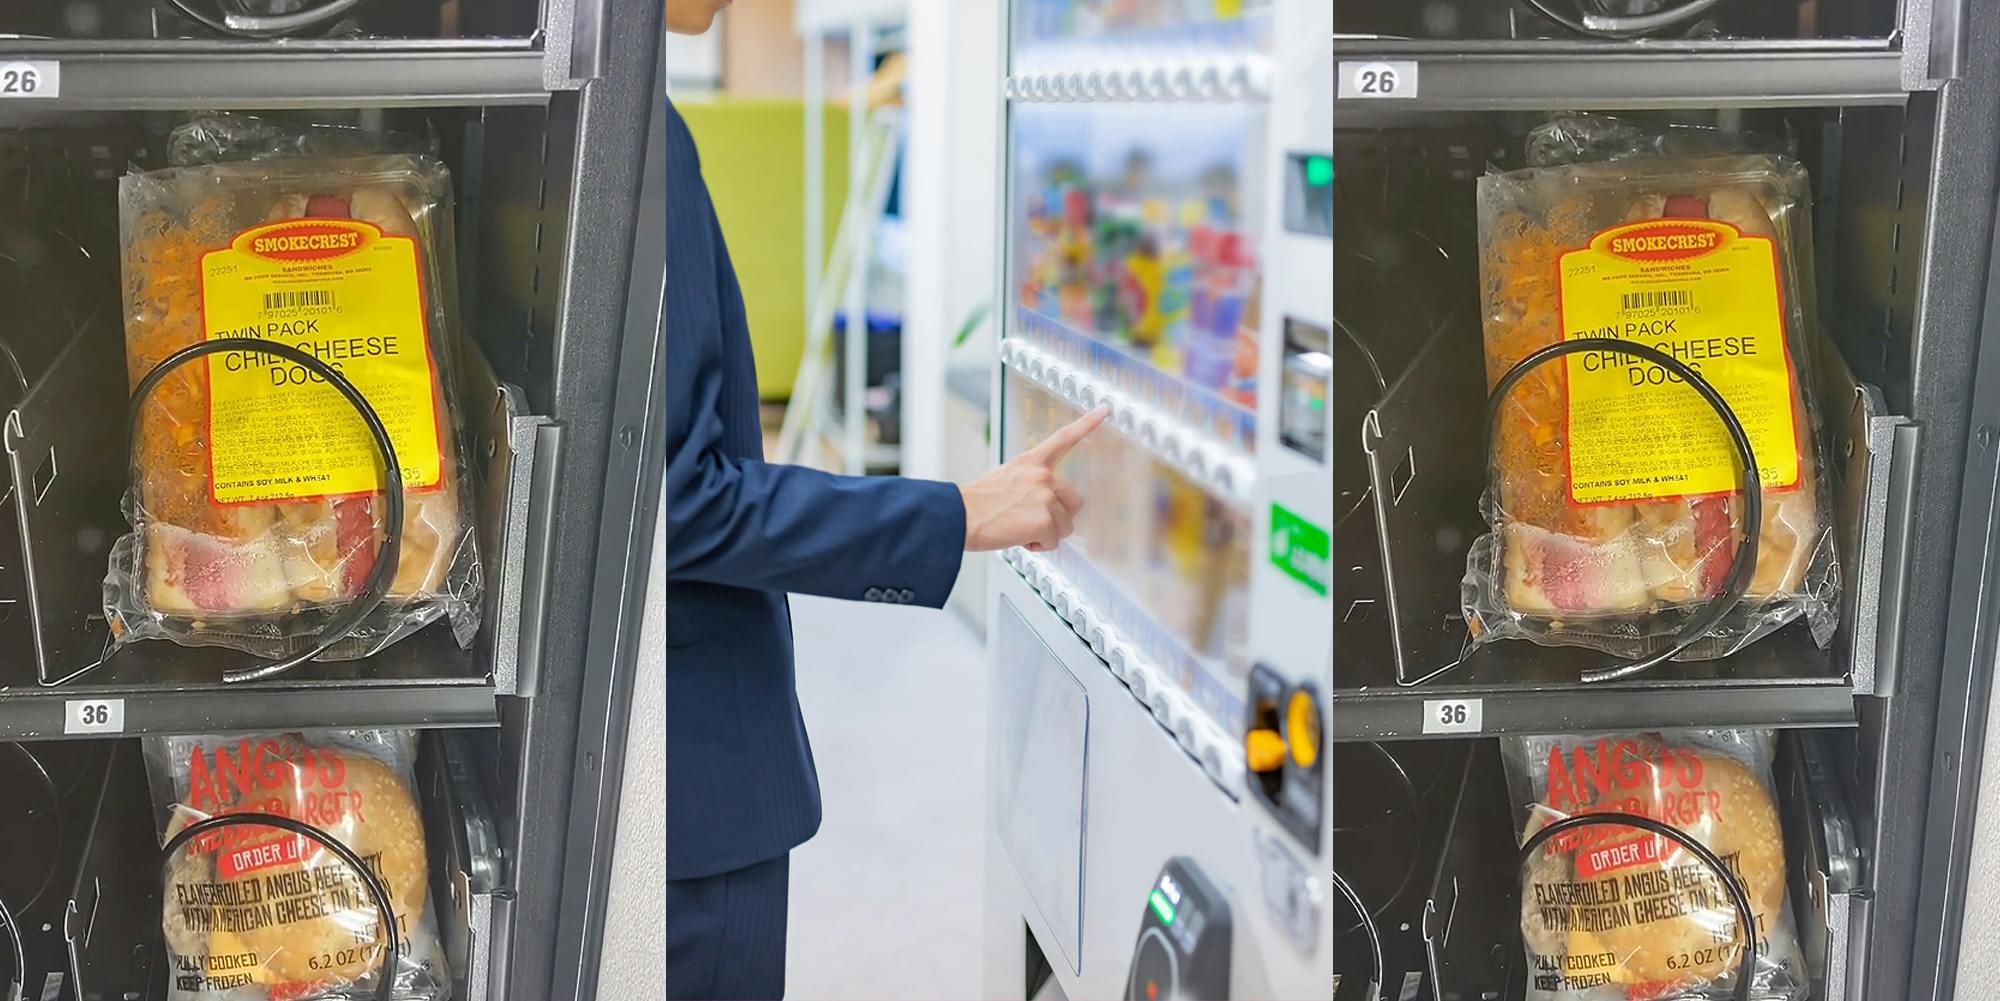 chili cheese dog in vending machine (l) man at work vending machine choosing item (c) chili cheese dog in vending machine (r)